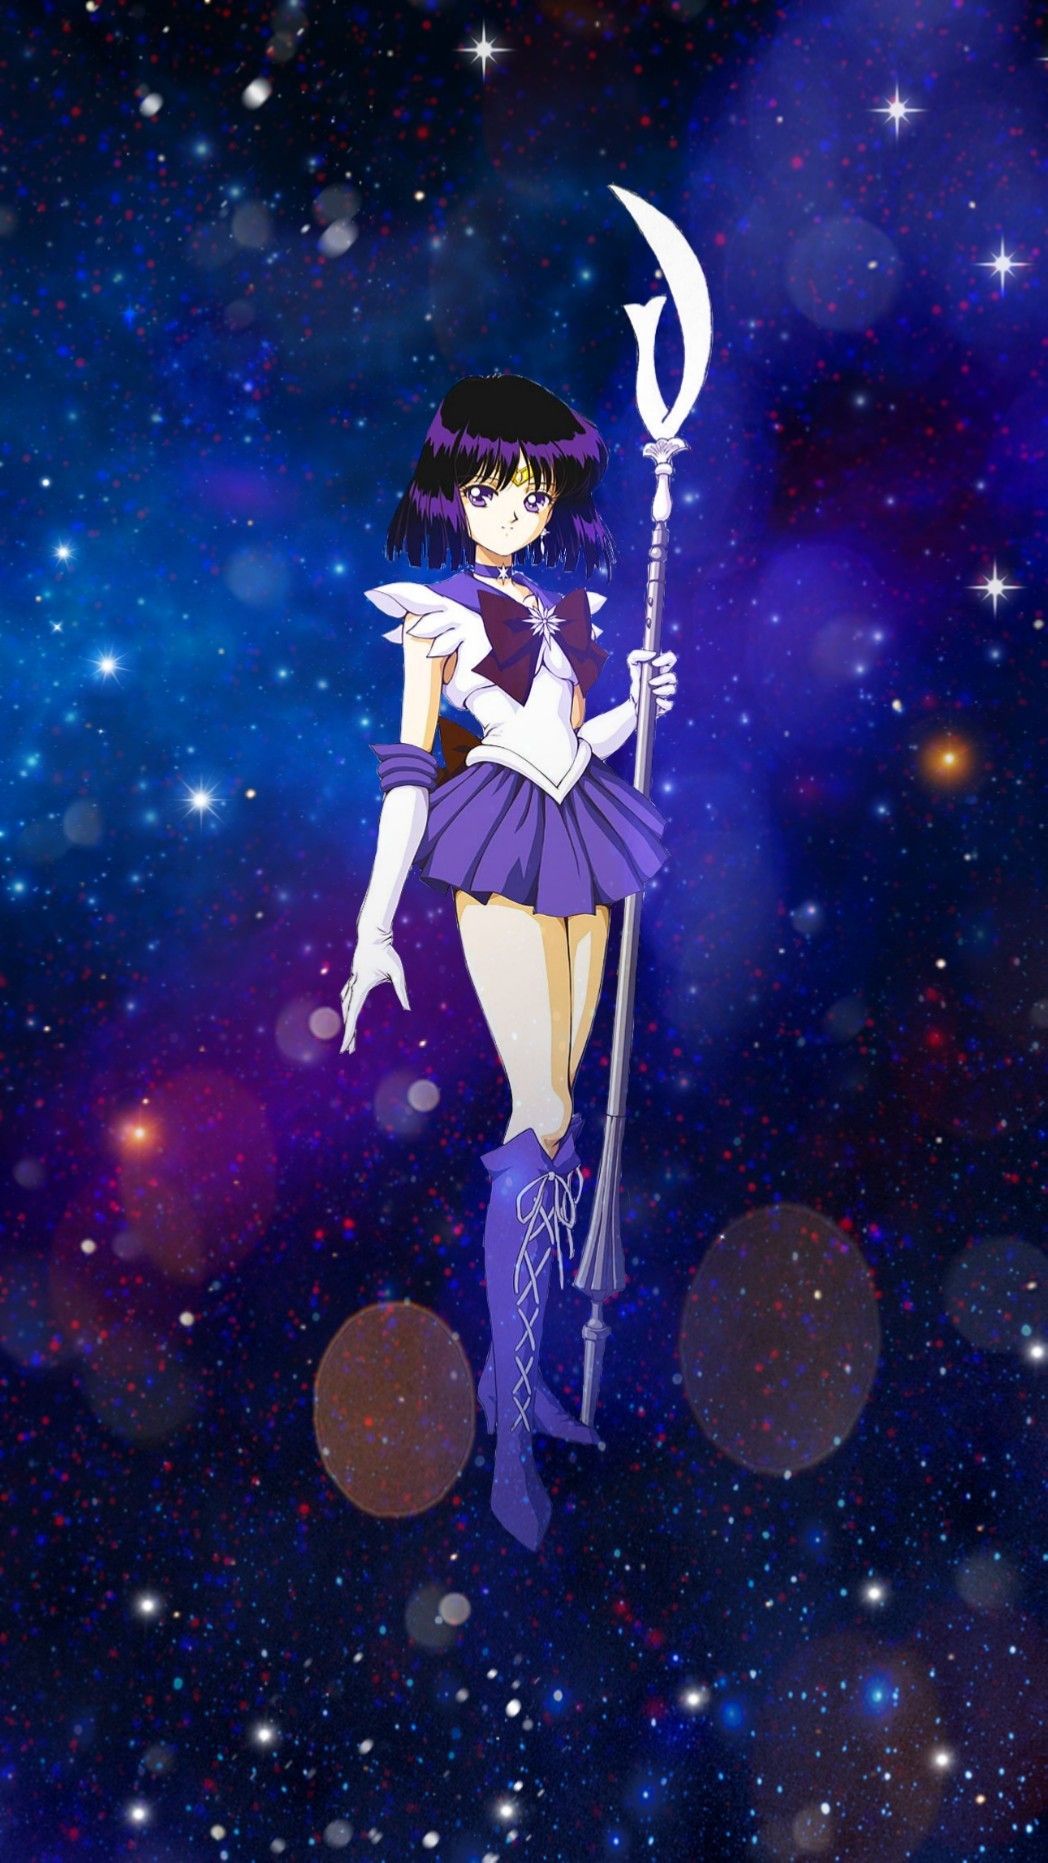 Sailor Saturn wallpaper en 2022. Sailor saturn, Personajes de anime, Sailor moon